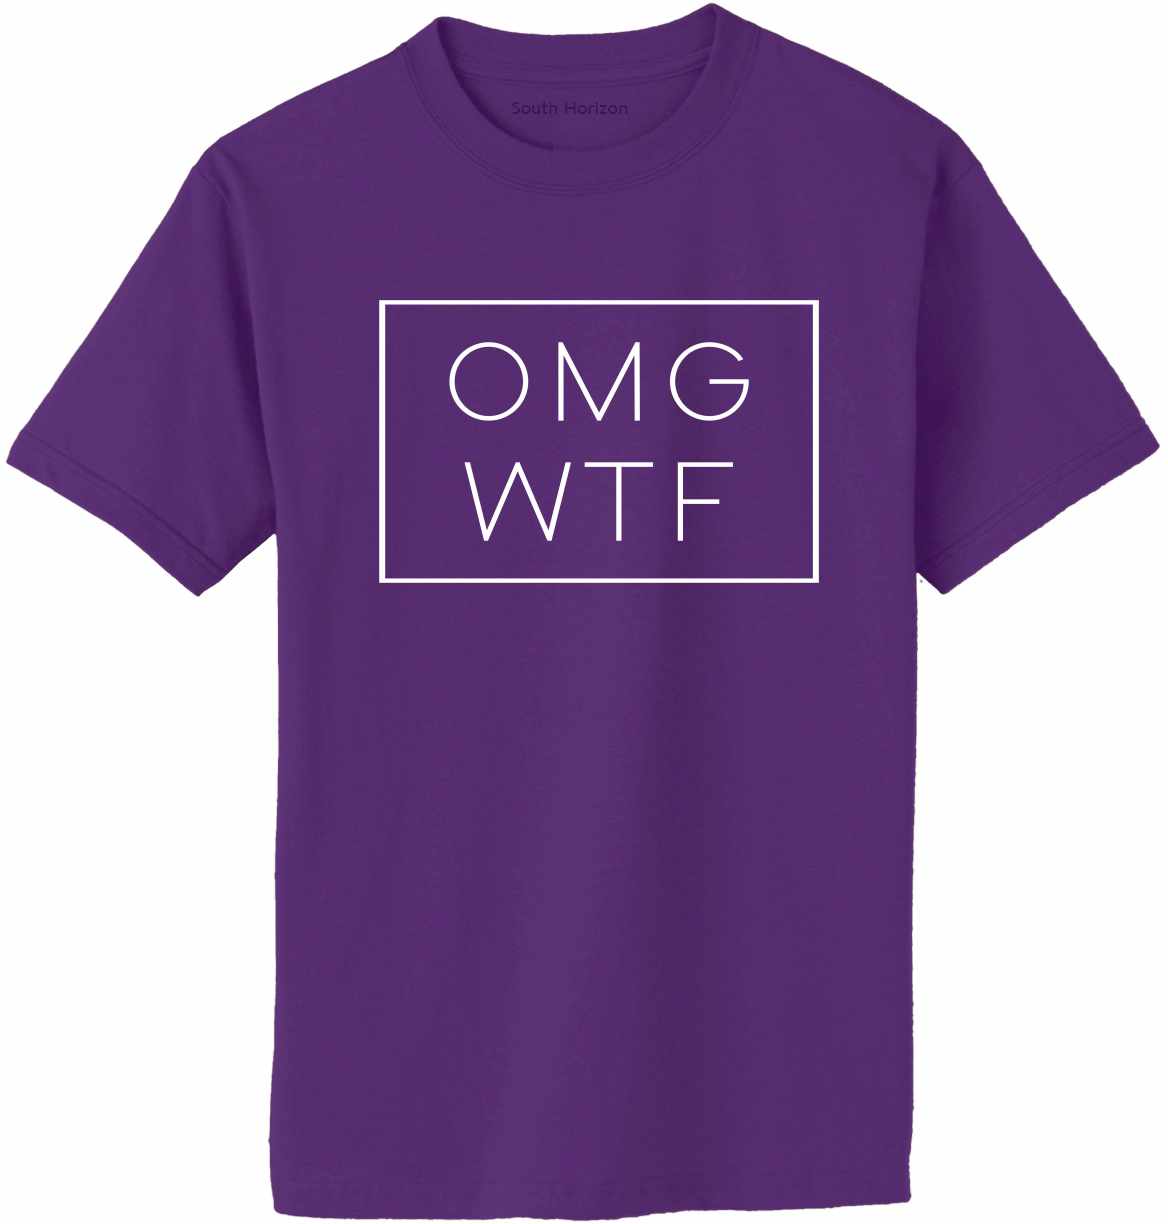 OMG WTF - Box on Adult T-Shirt